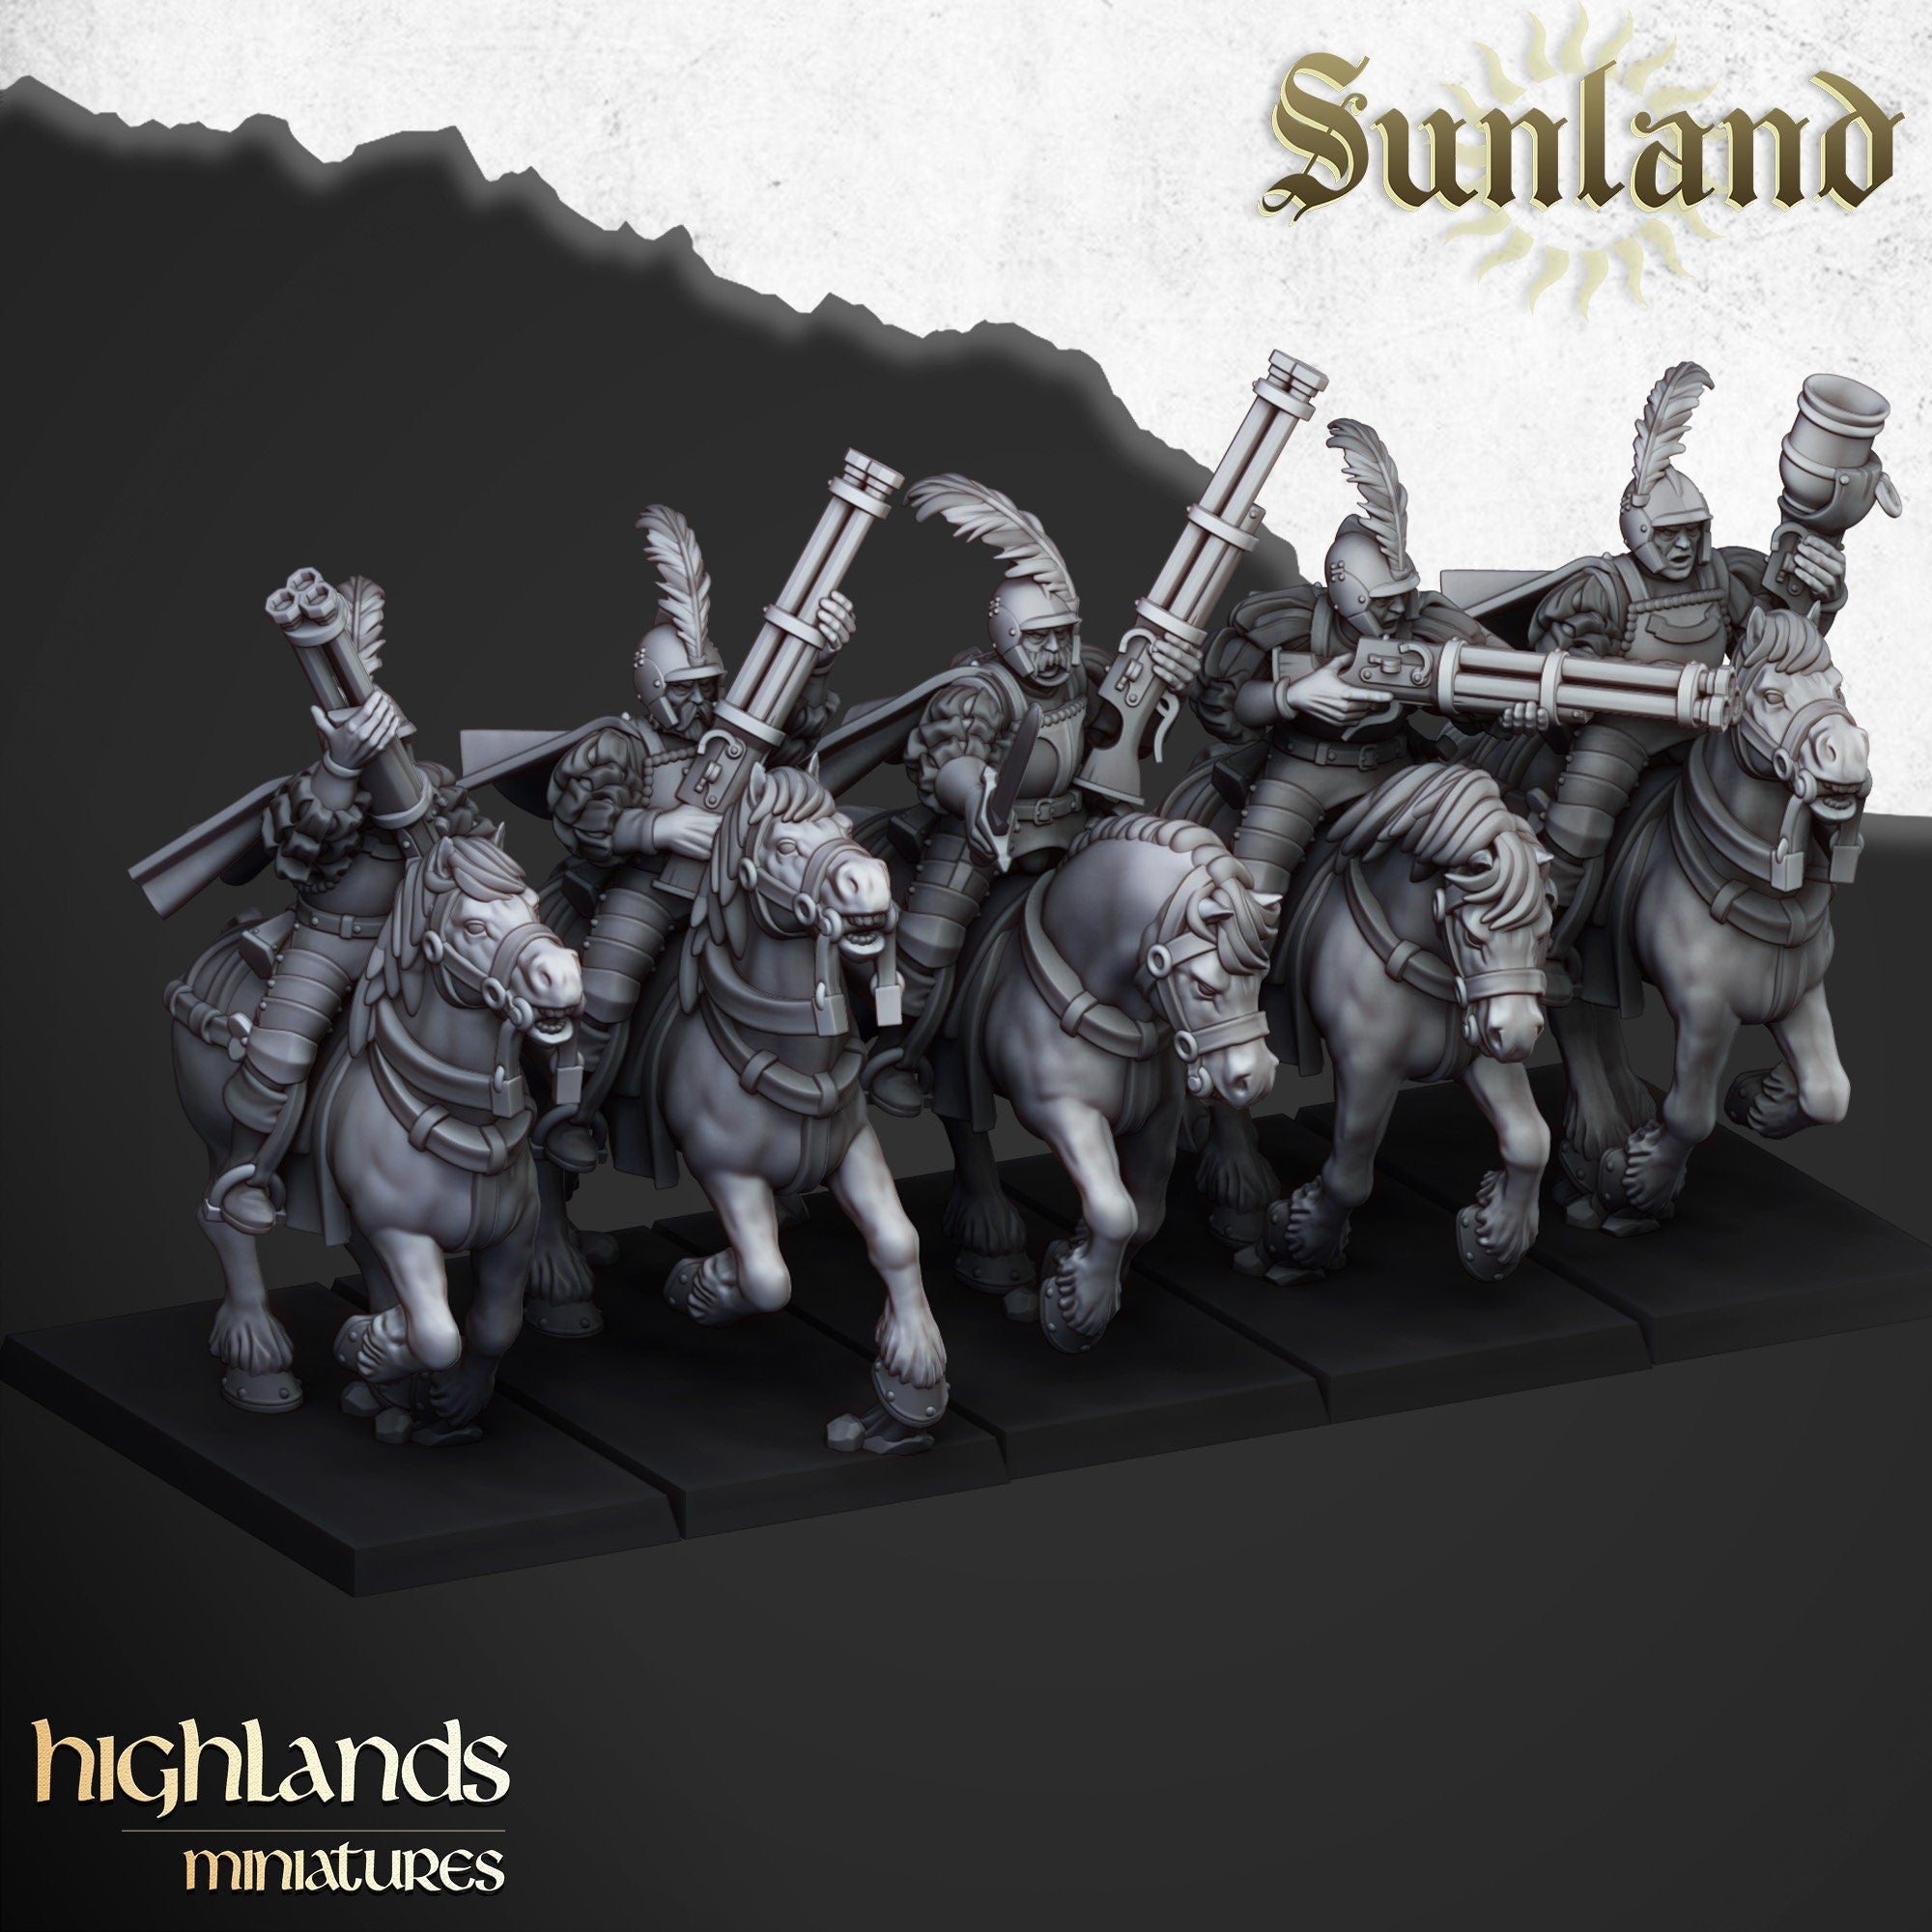 Sunland Pistoleers Unit By Highlands Miniatures